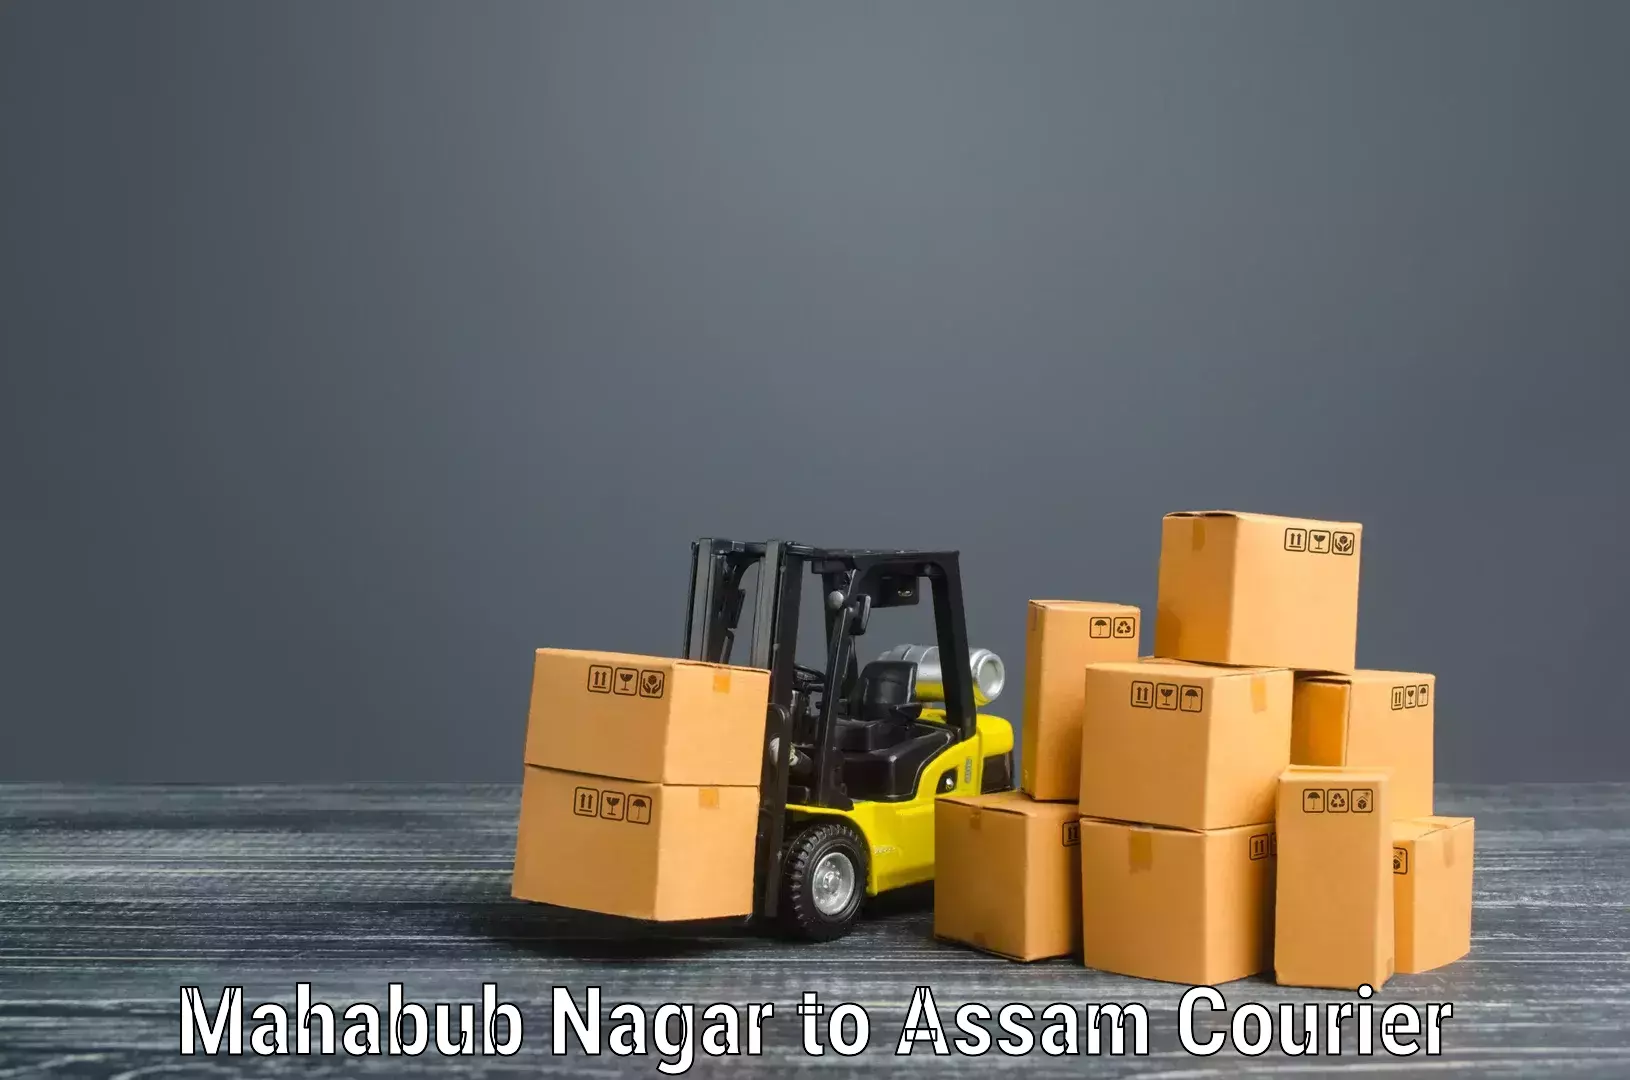 Moving and storage services in Mahabub Nagar to Marigaon